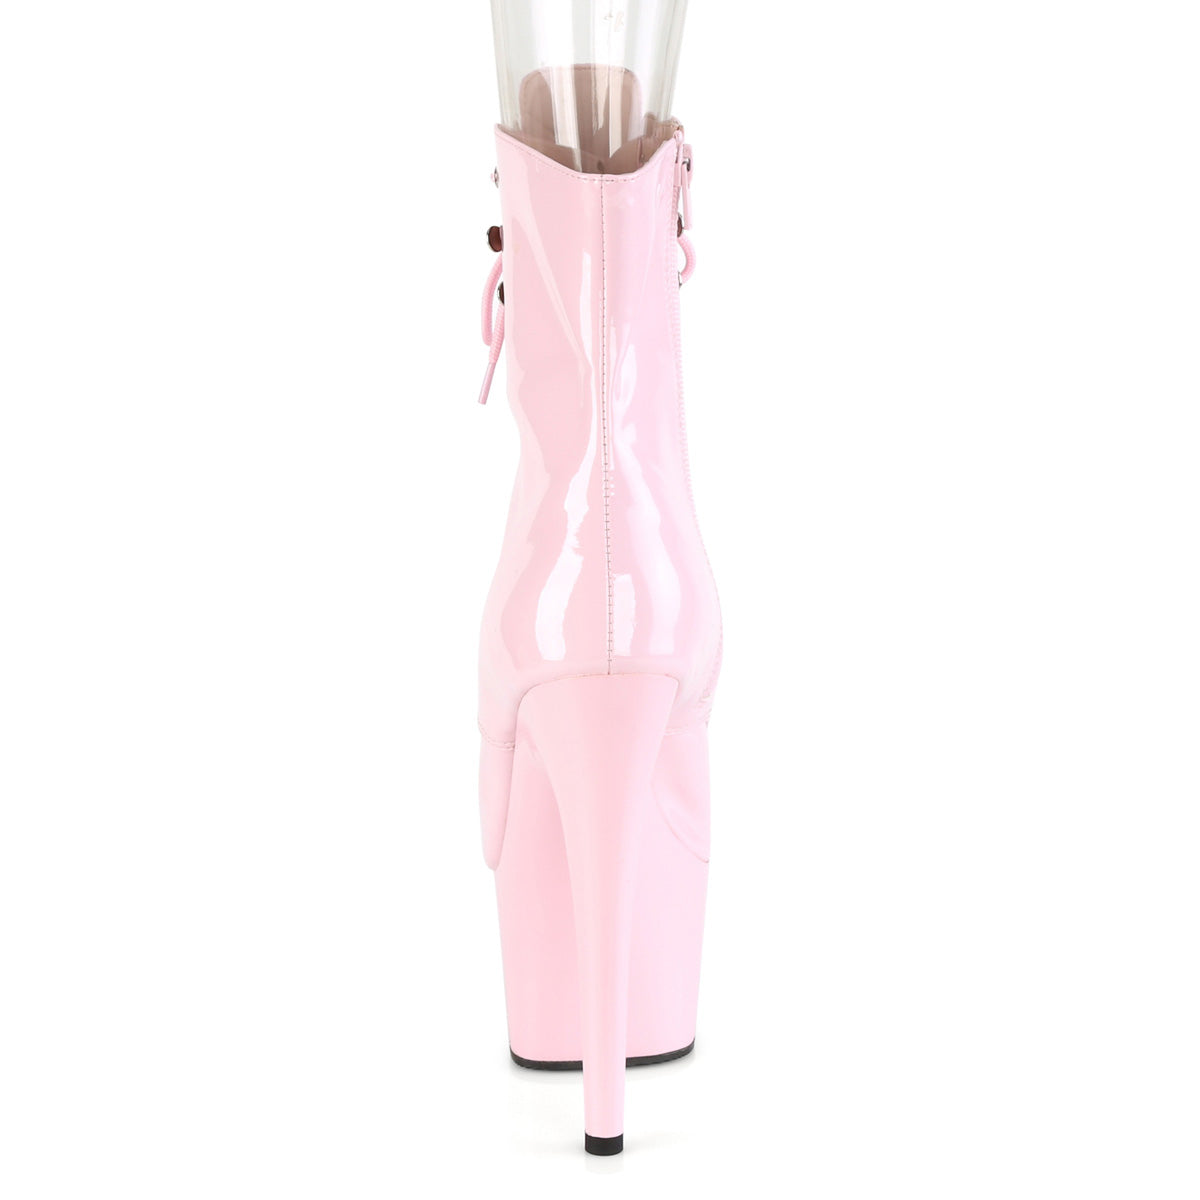 ADORE-1021 Pink Patent Calf High Peep Toe Boots